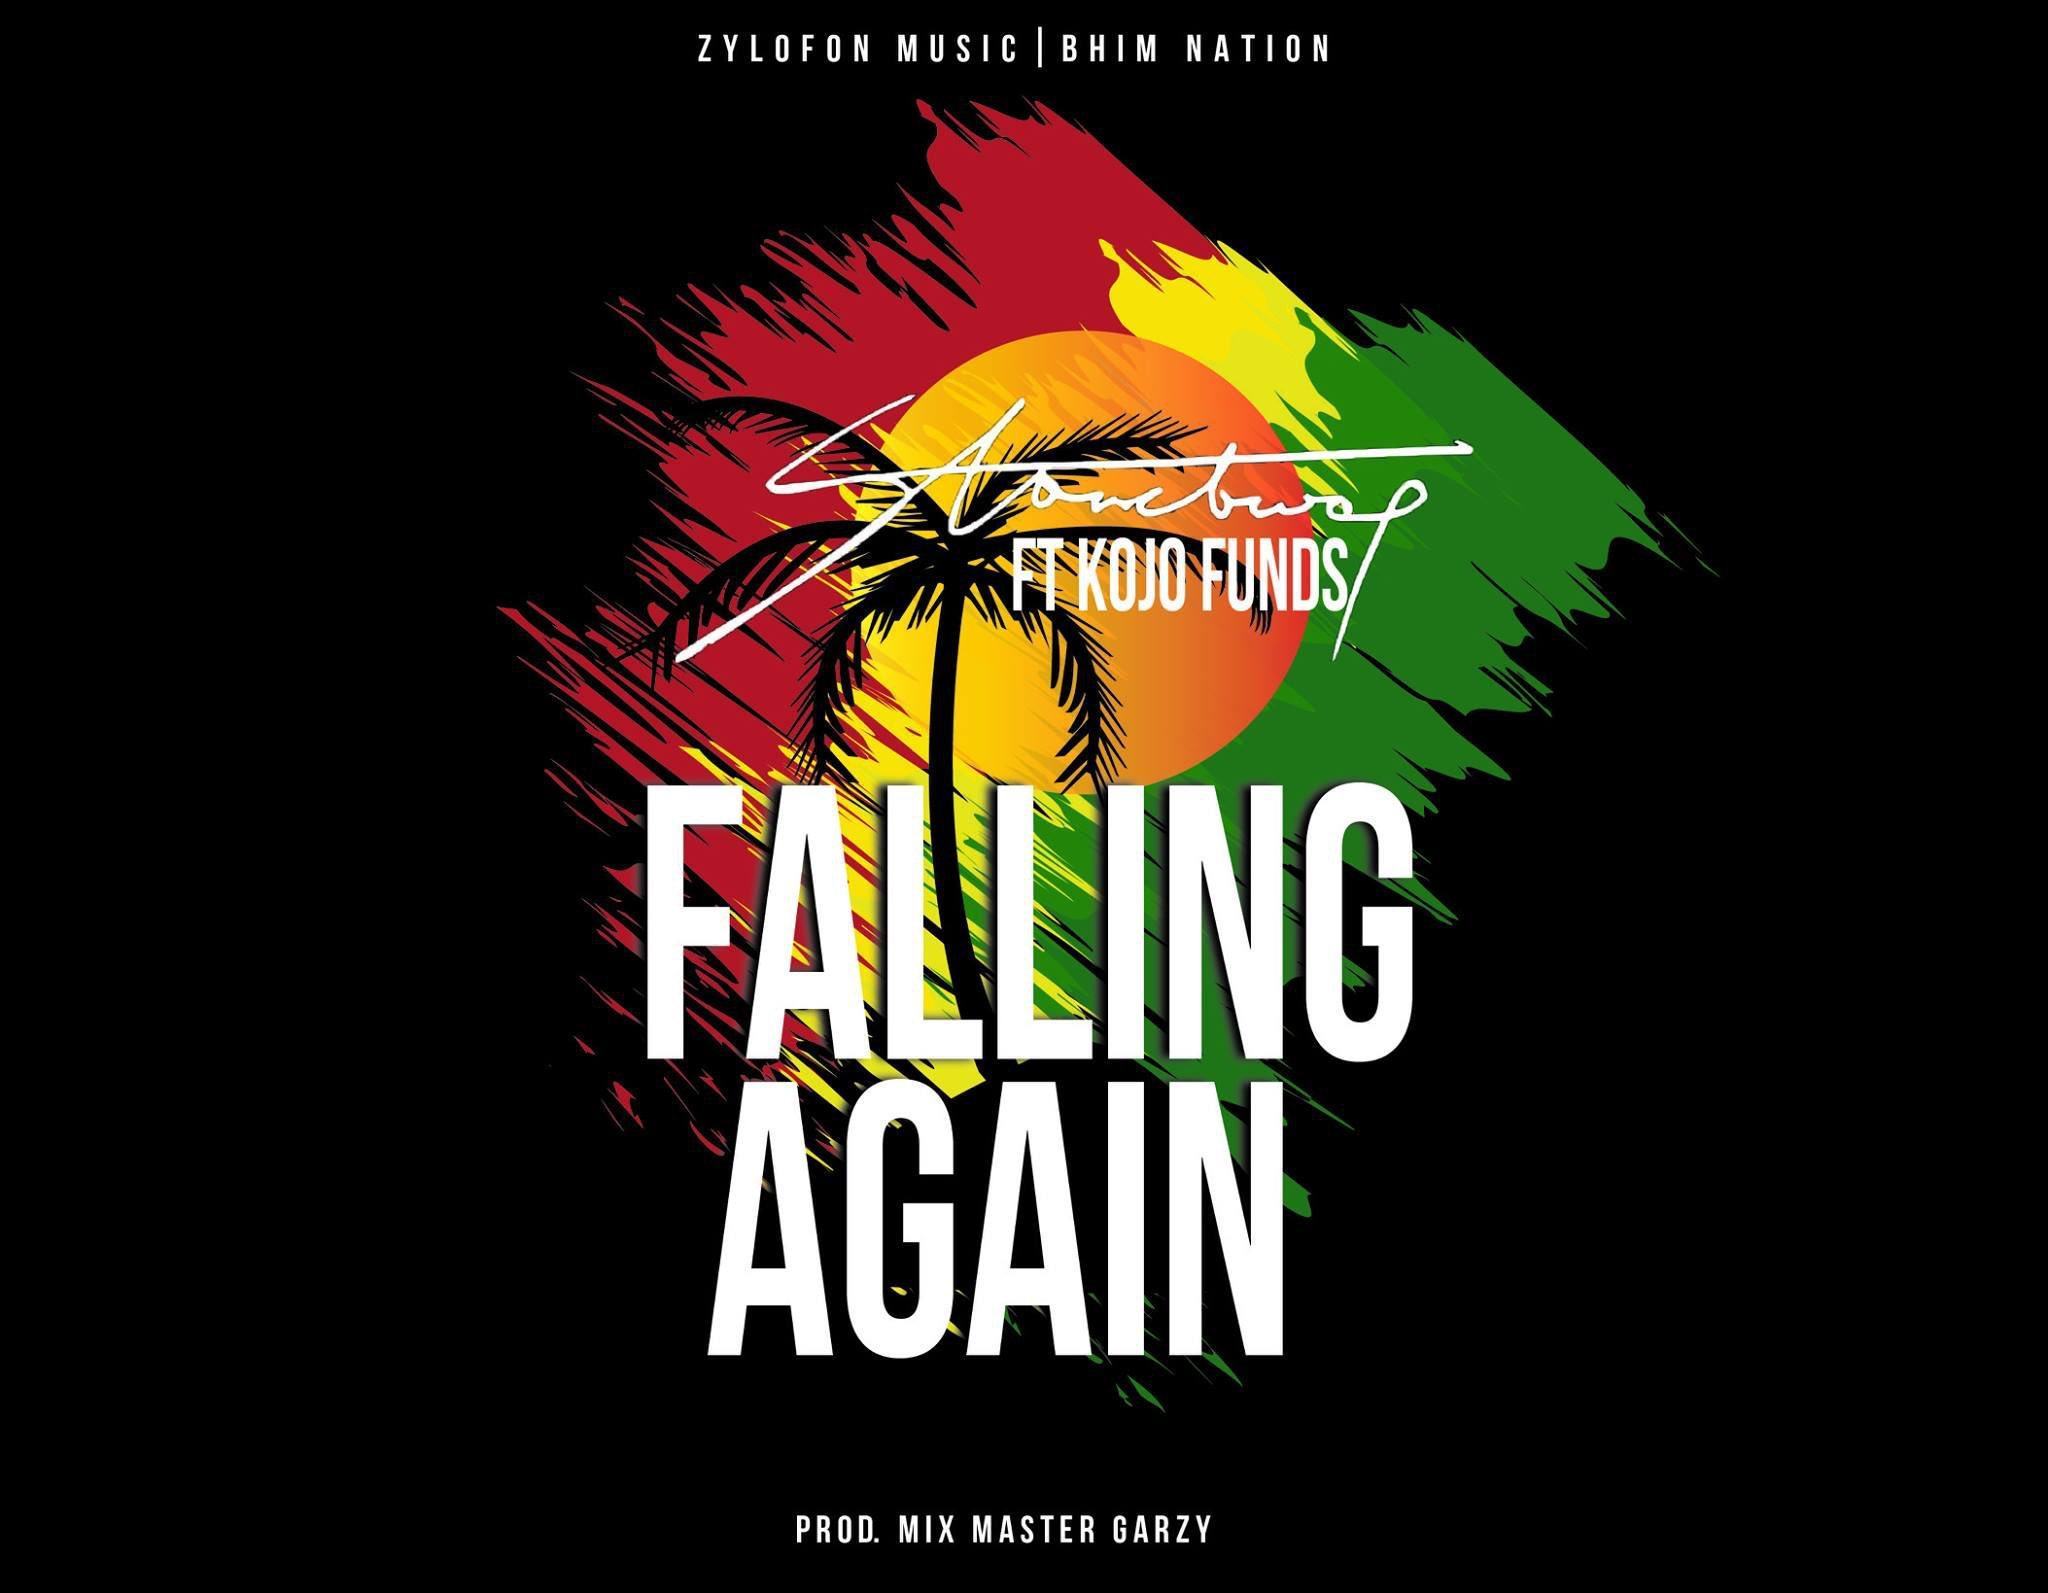 StoneBwoy – Falling Again ft KoJo Funds [ViDeo]